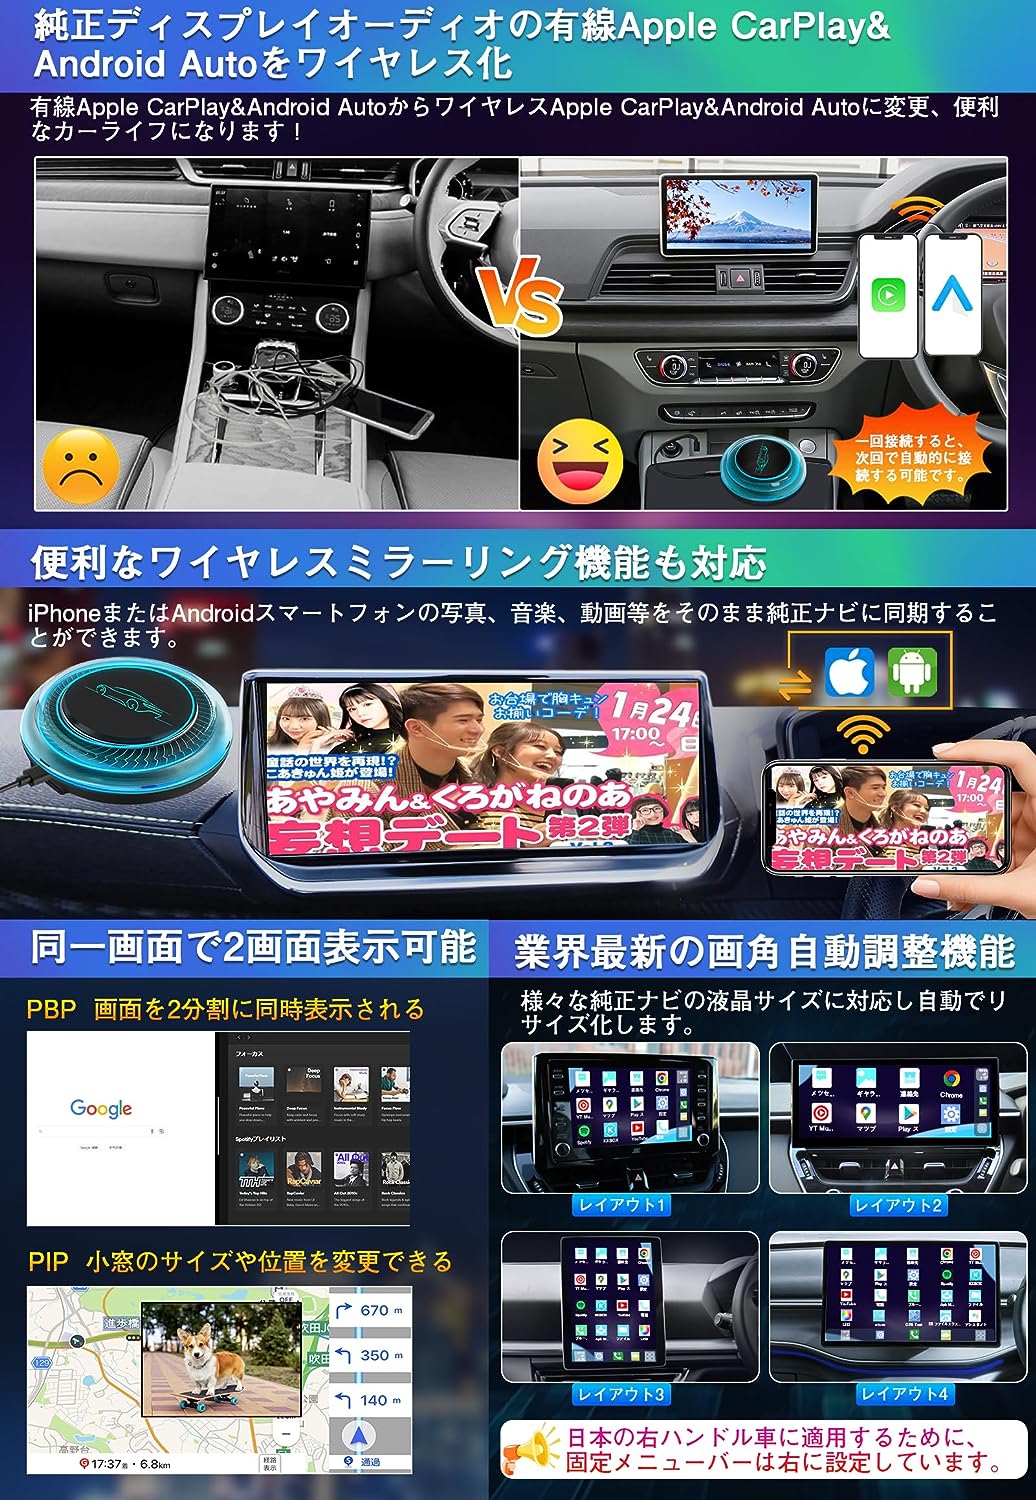 AIAUTO6Pro CarPlay AI Box 2023年最新型 Android13.0システム搭載